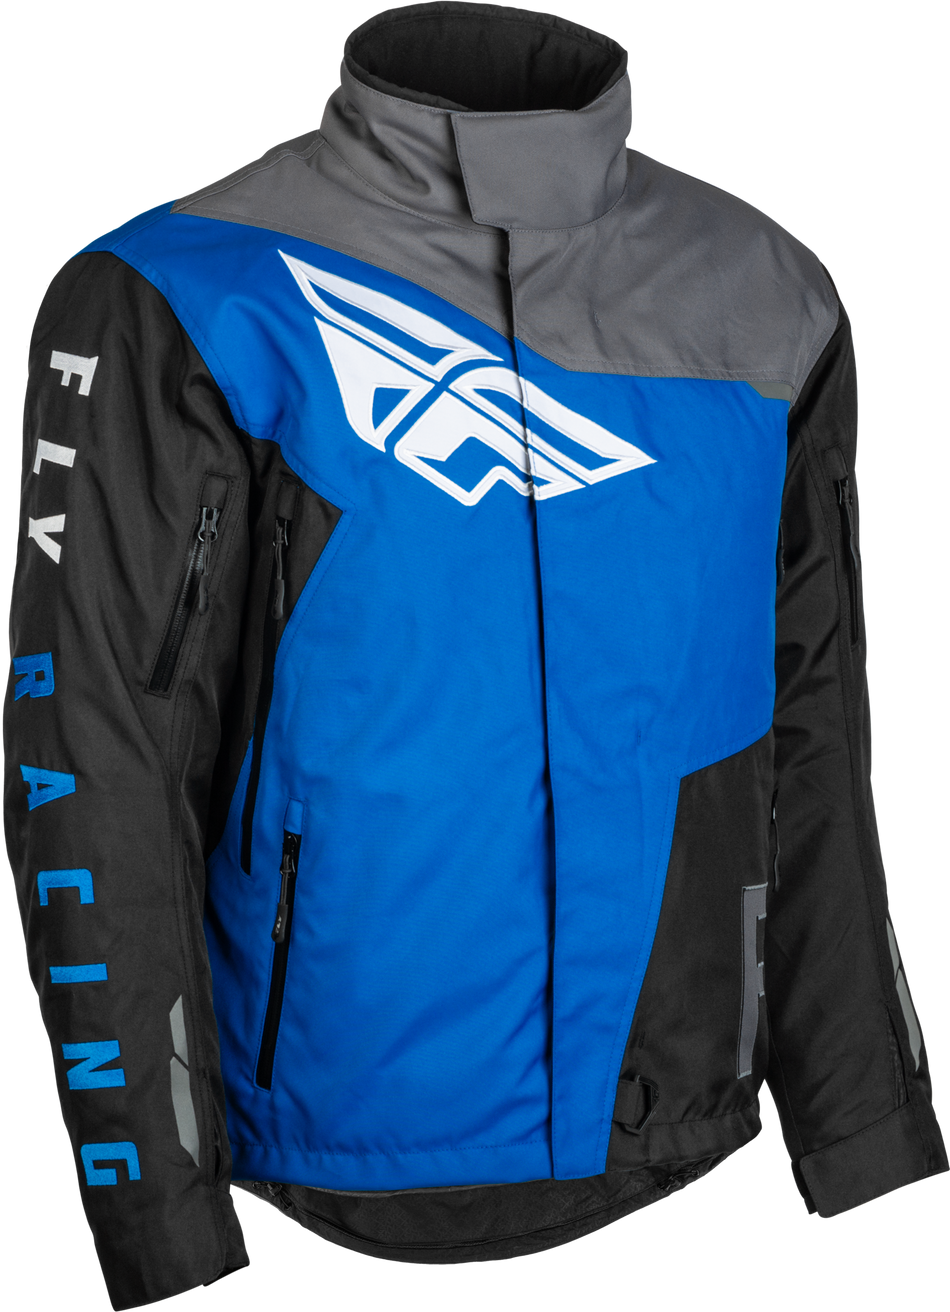 FLY RACING Snx Pro Jacket Black/Grey/Blue Sm 470-4116S